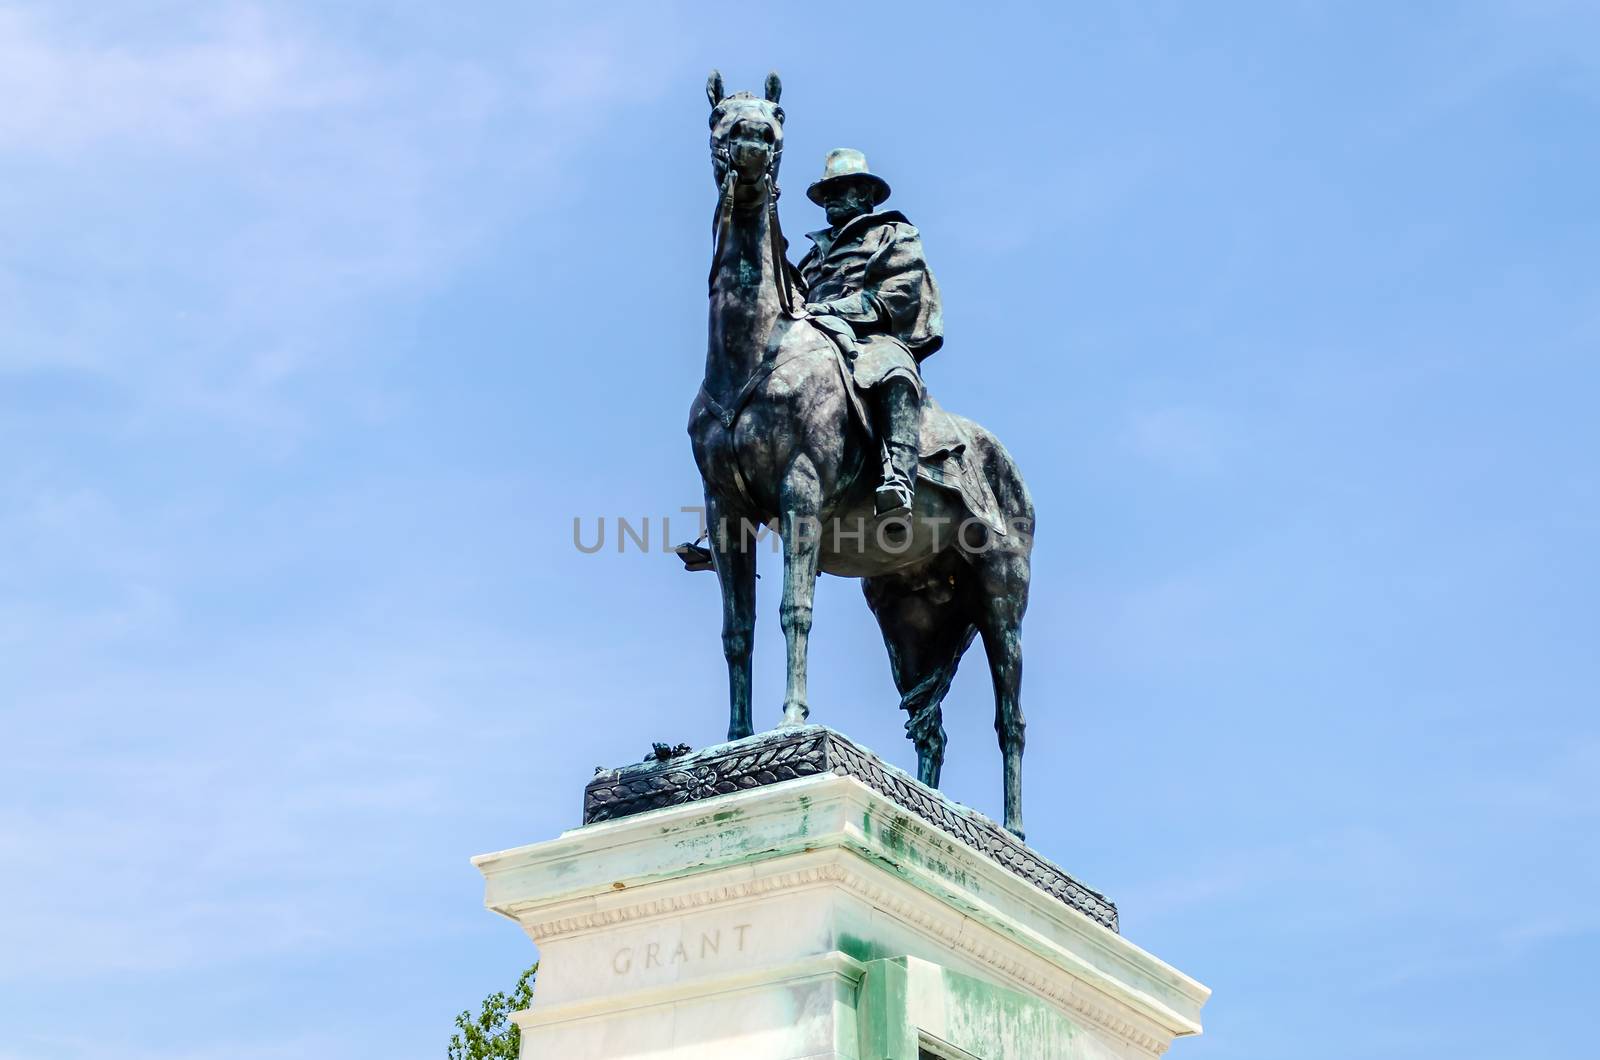 Ulysses S. Grant Memorial Washington DC, against a blue sky